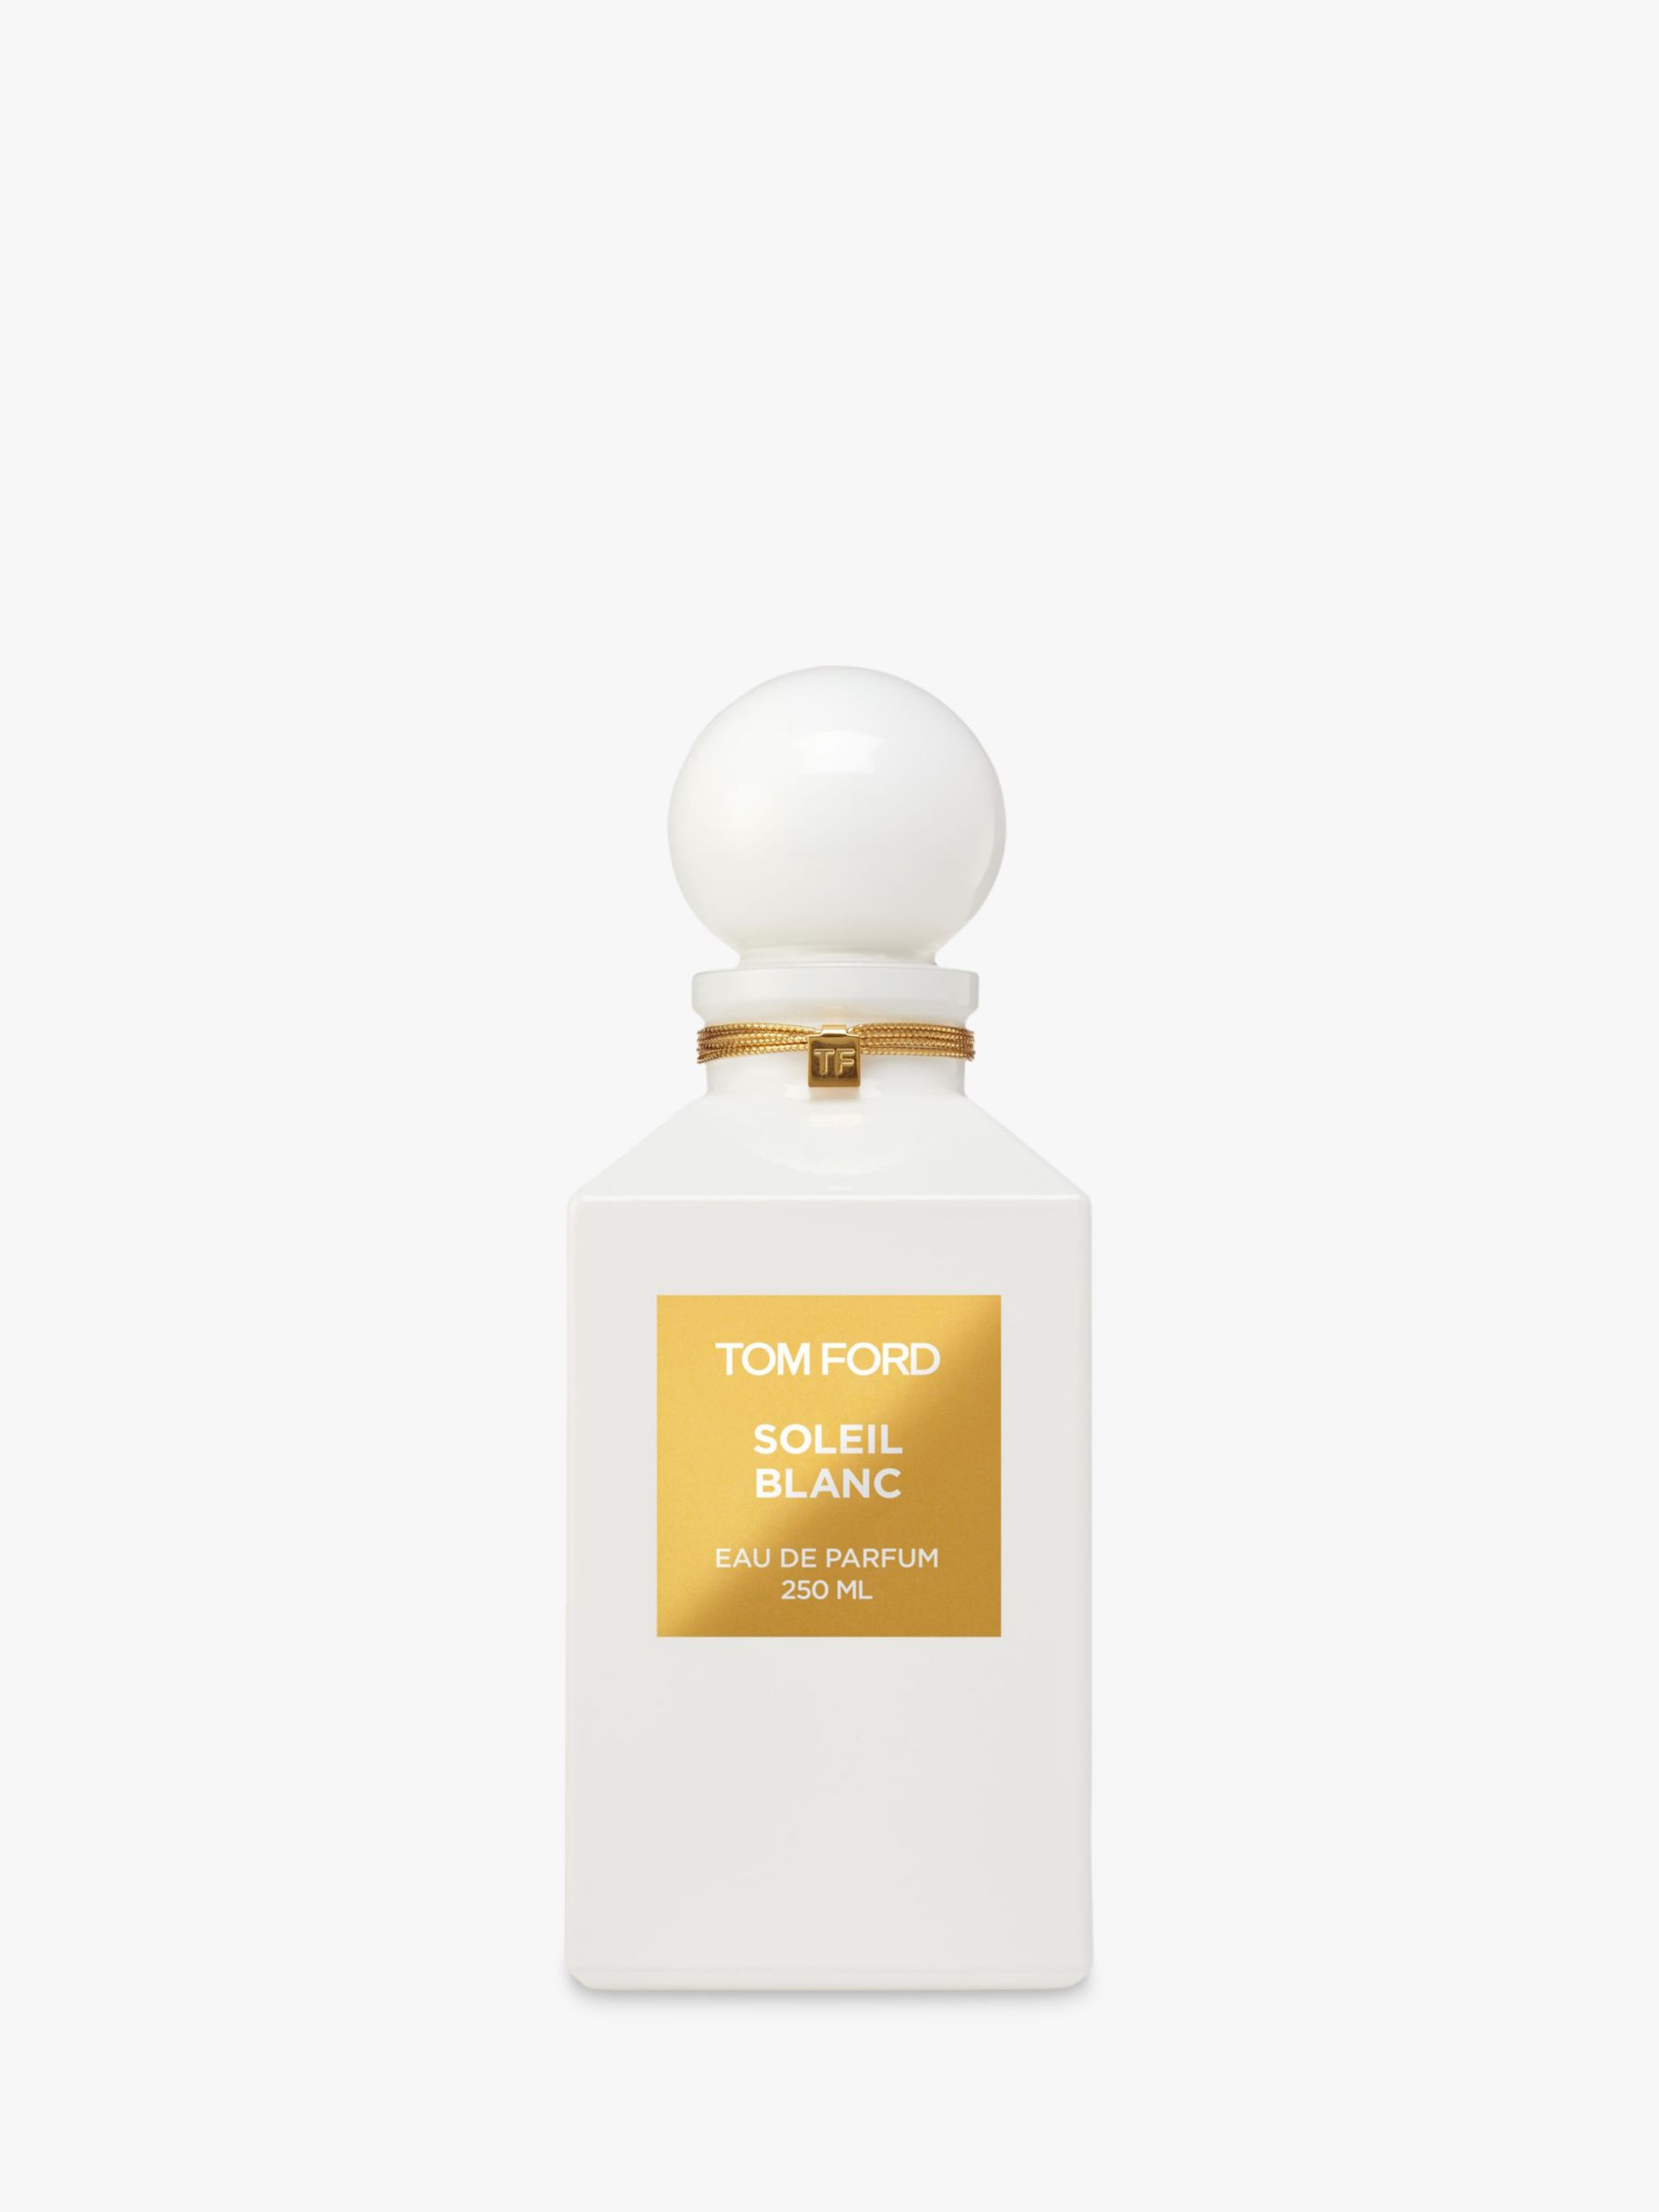 TOM FORD Private Blend Soleil Blanc Eau de Parfum, 250ml at John Lewis &  Partners